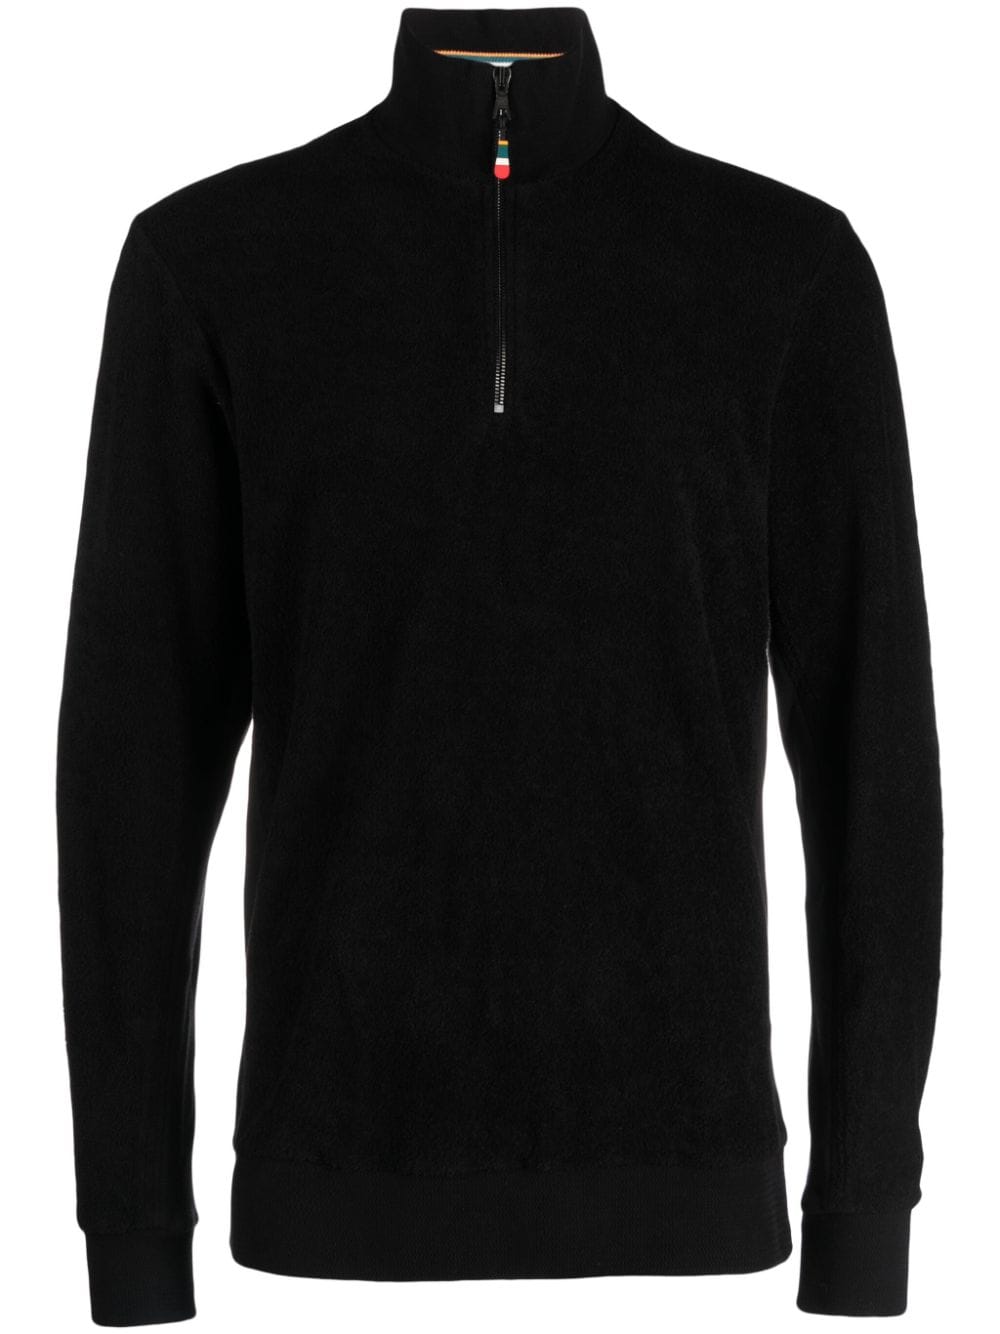 Image 1 of Orlebar Brown Isar zip-up sweatshirt